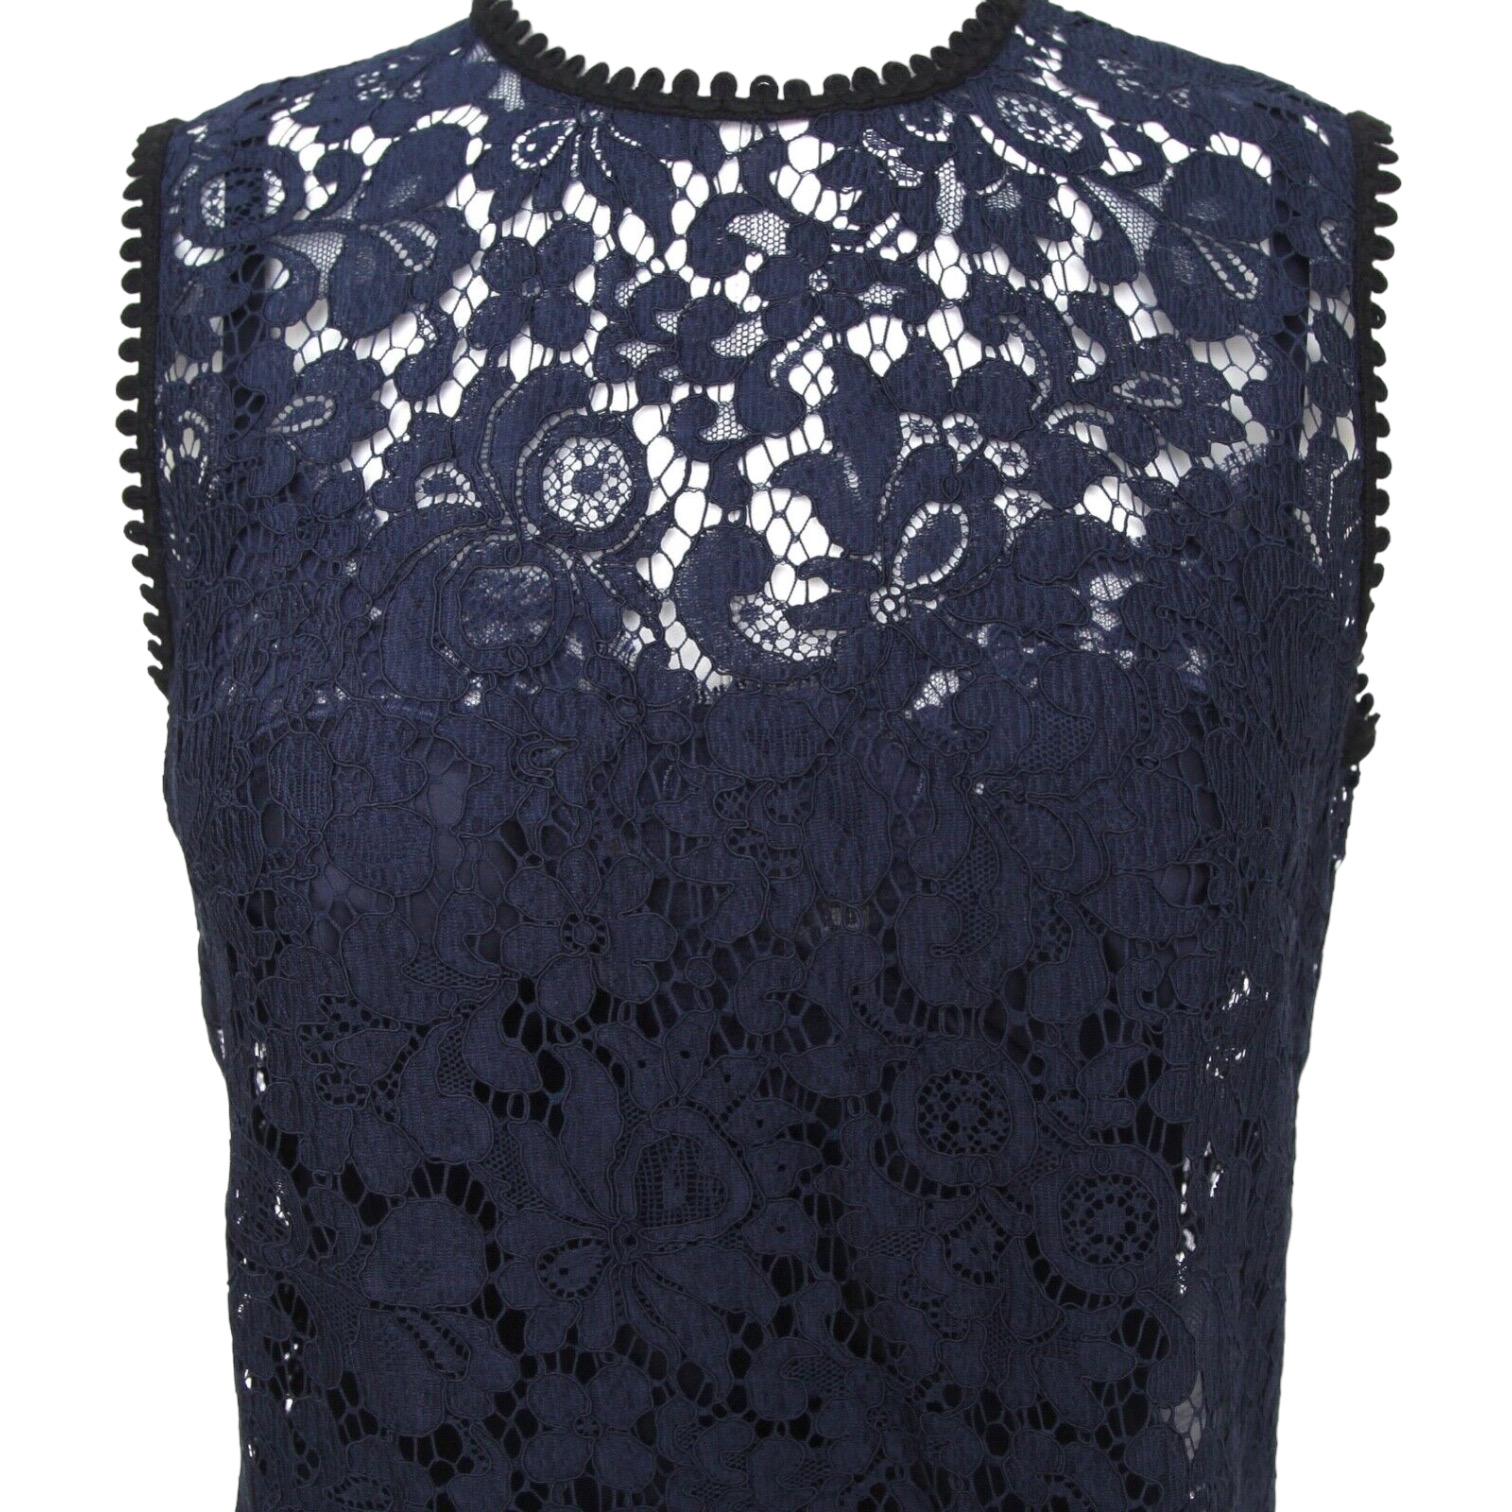 DOLCE & GABBANA Blouse Shirt Top Navy Blue Black Sleeveless Lace Sz 40 Ret $1495 For Sale 3